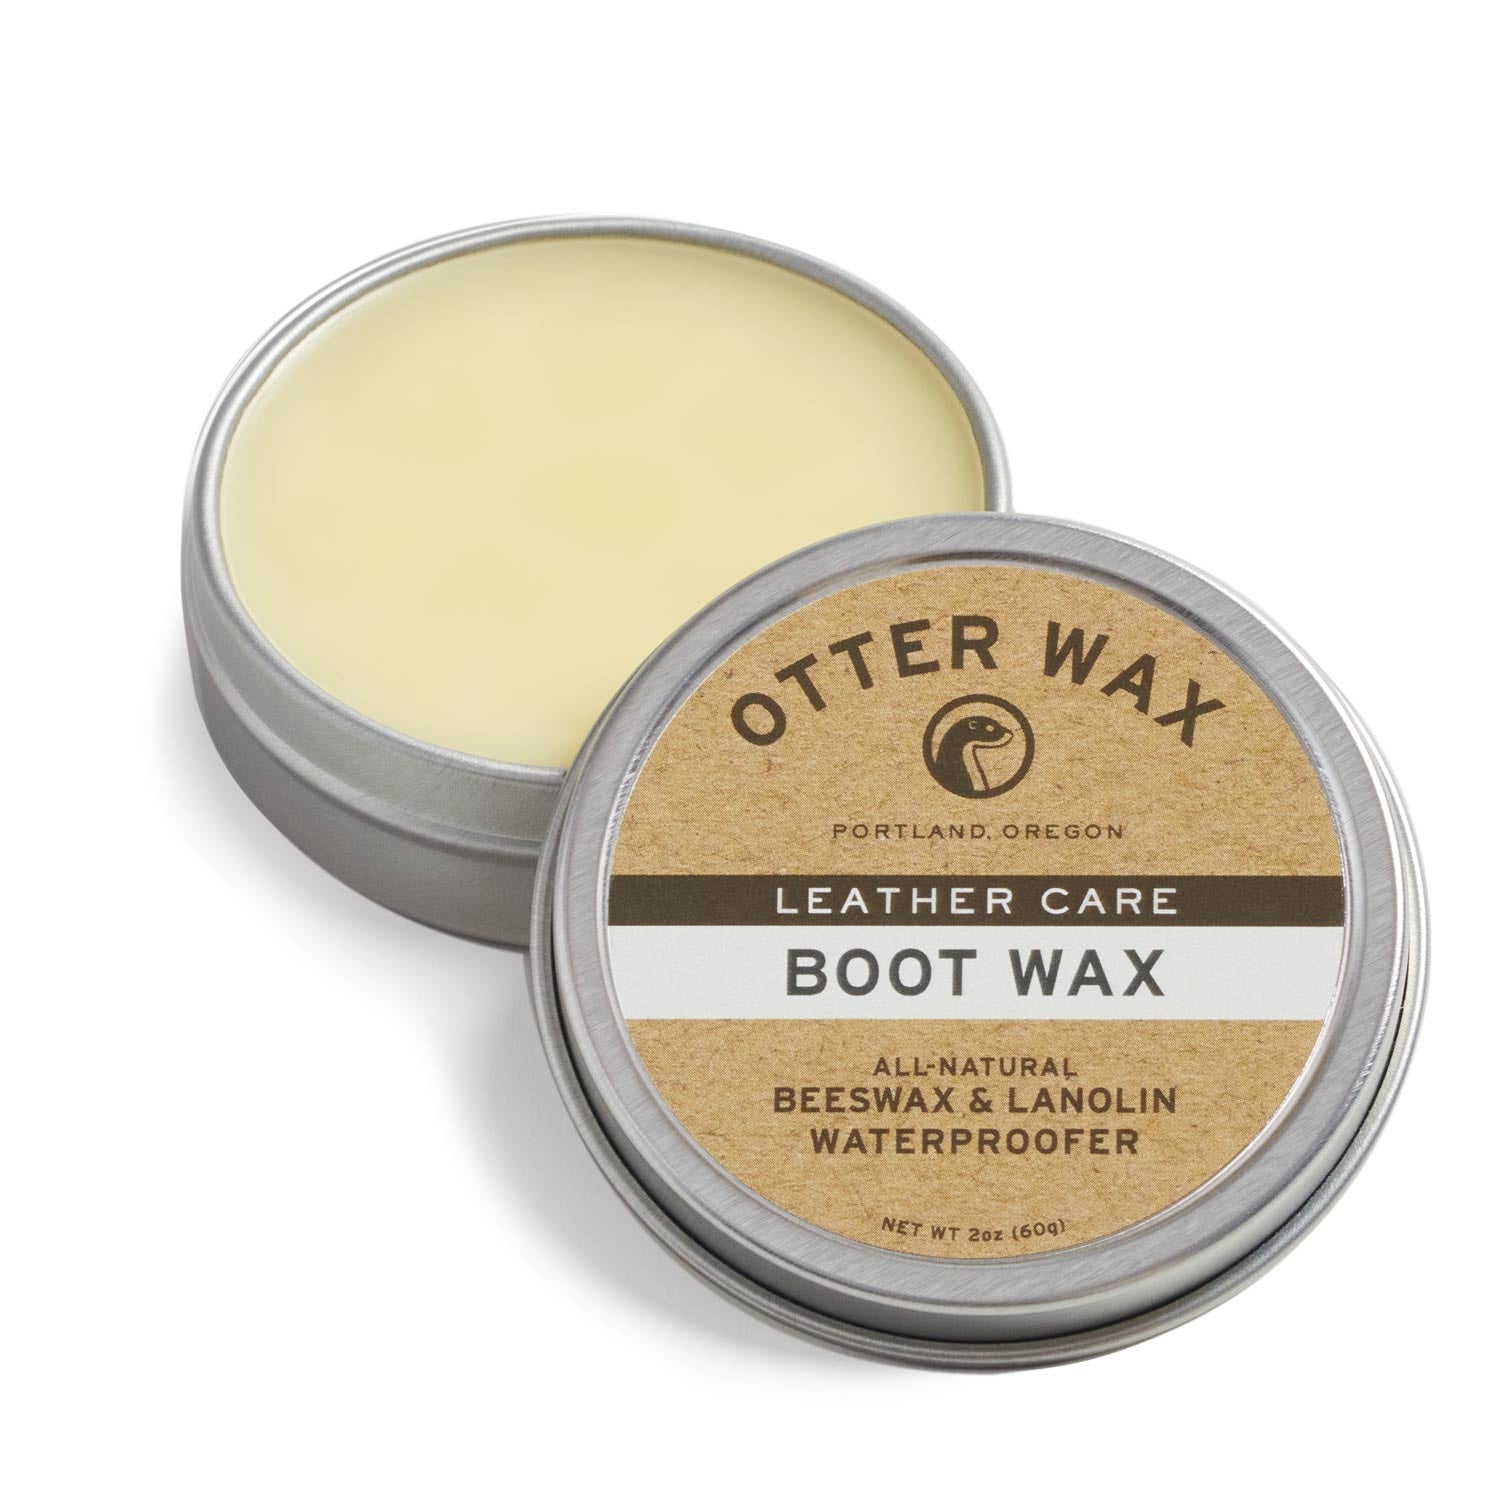 Boot Wax from OtterWax - $15.95 